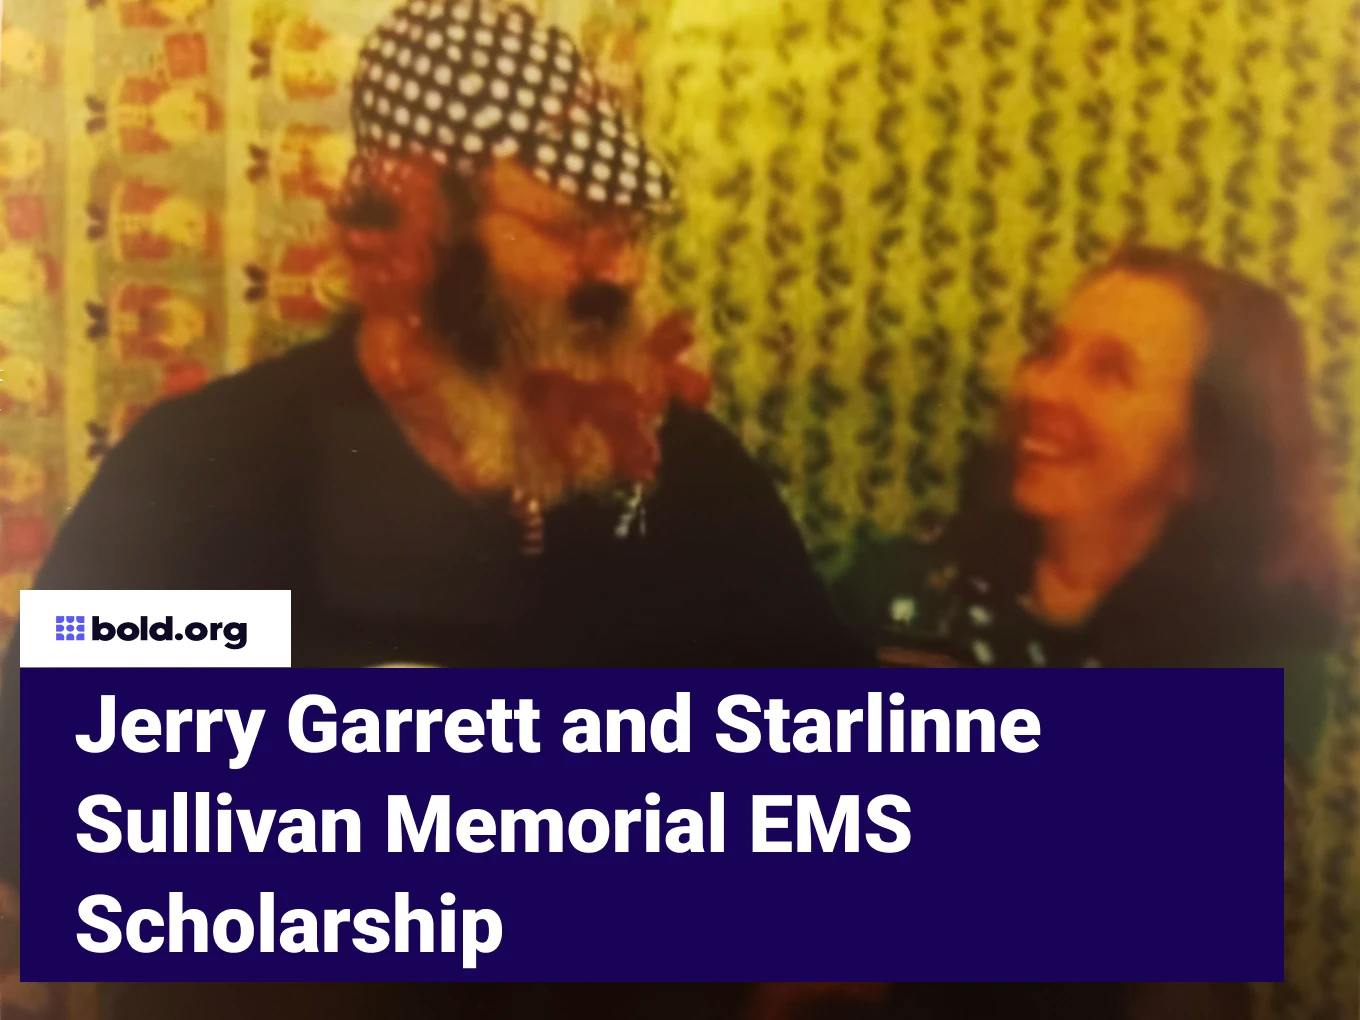 Jerry Garrett and Starlinne Sullivan Memorial EMS Scholarship